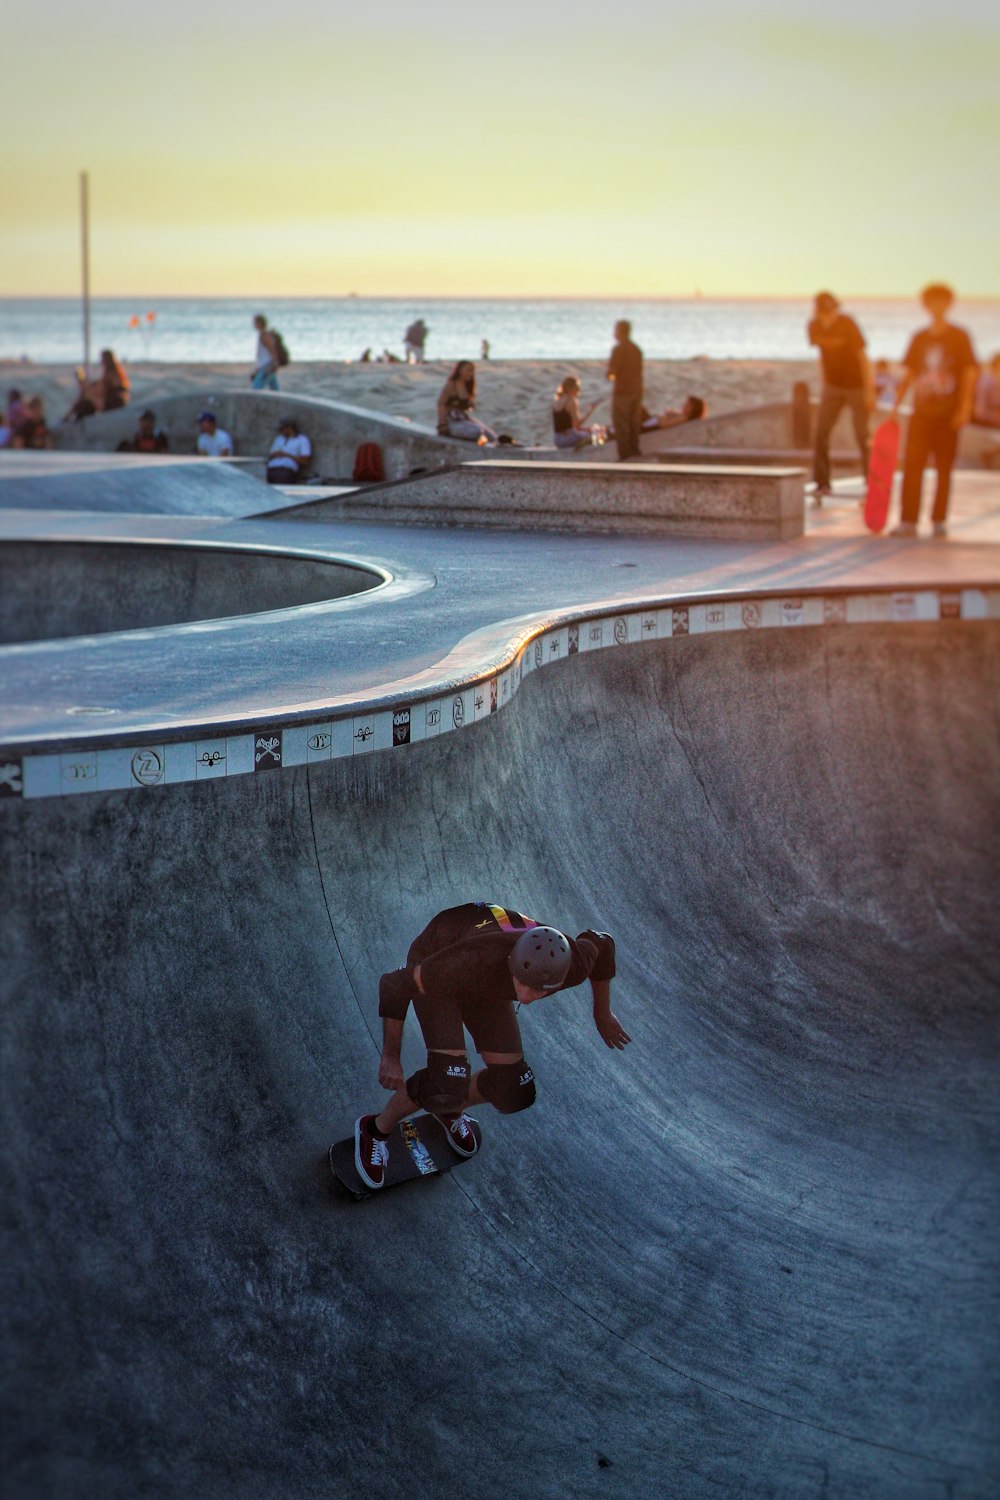 man doing skateboard tricks in a skateboard park